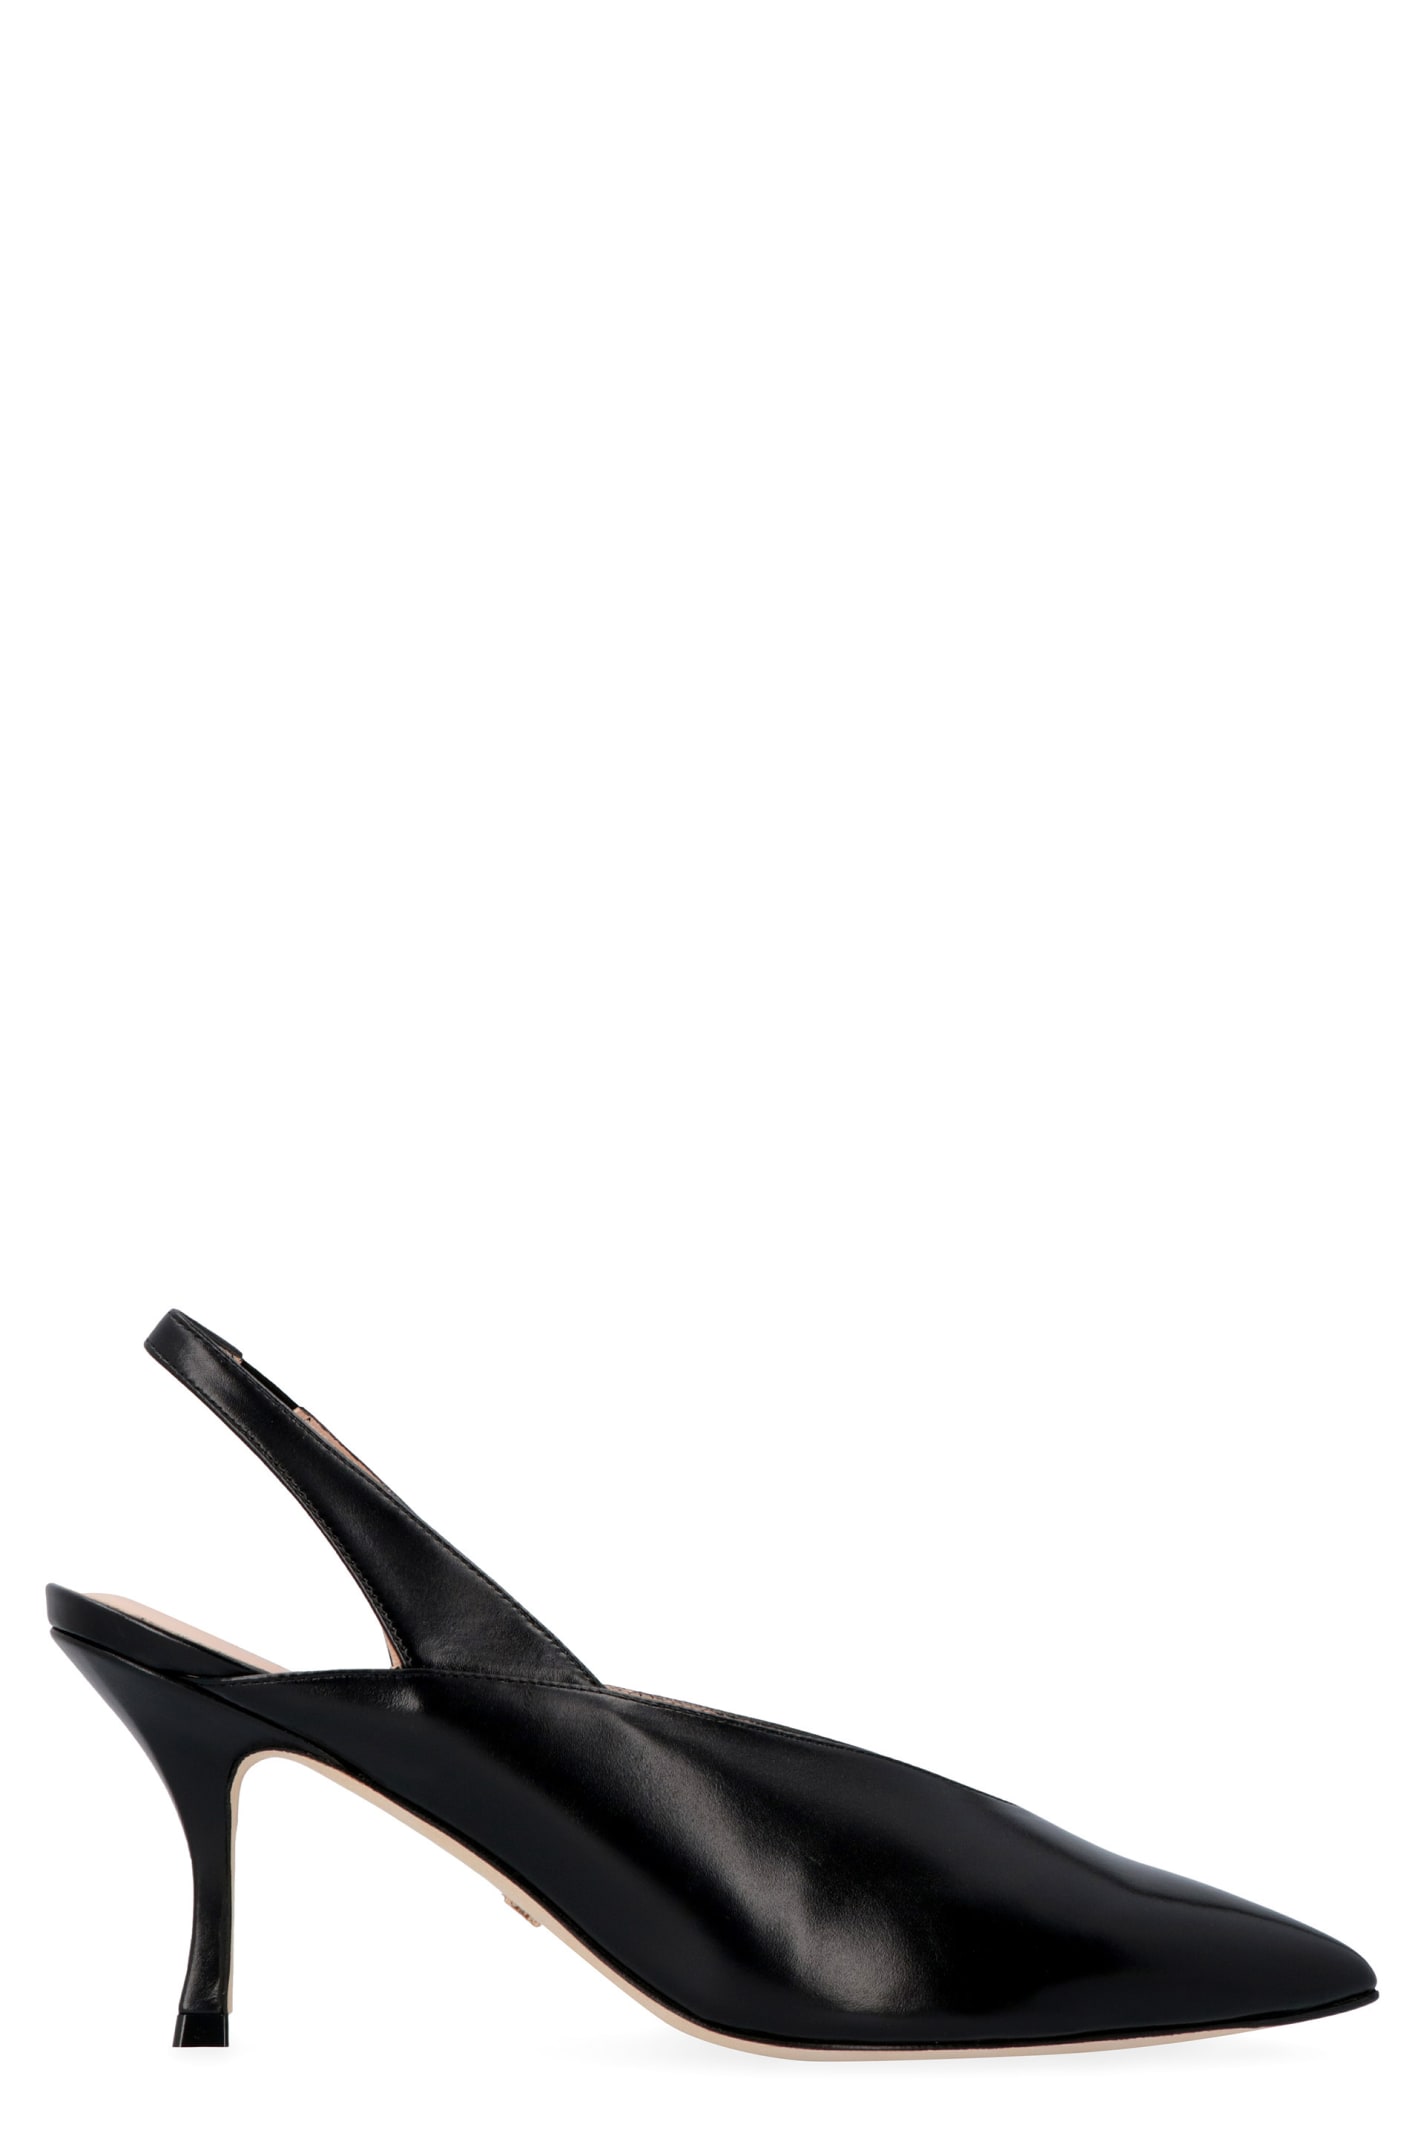 Buy Stuart Weitzman Avianna Leather Slingback Pumps online, shop Stuart Weitzman shoes with free shipping